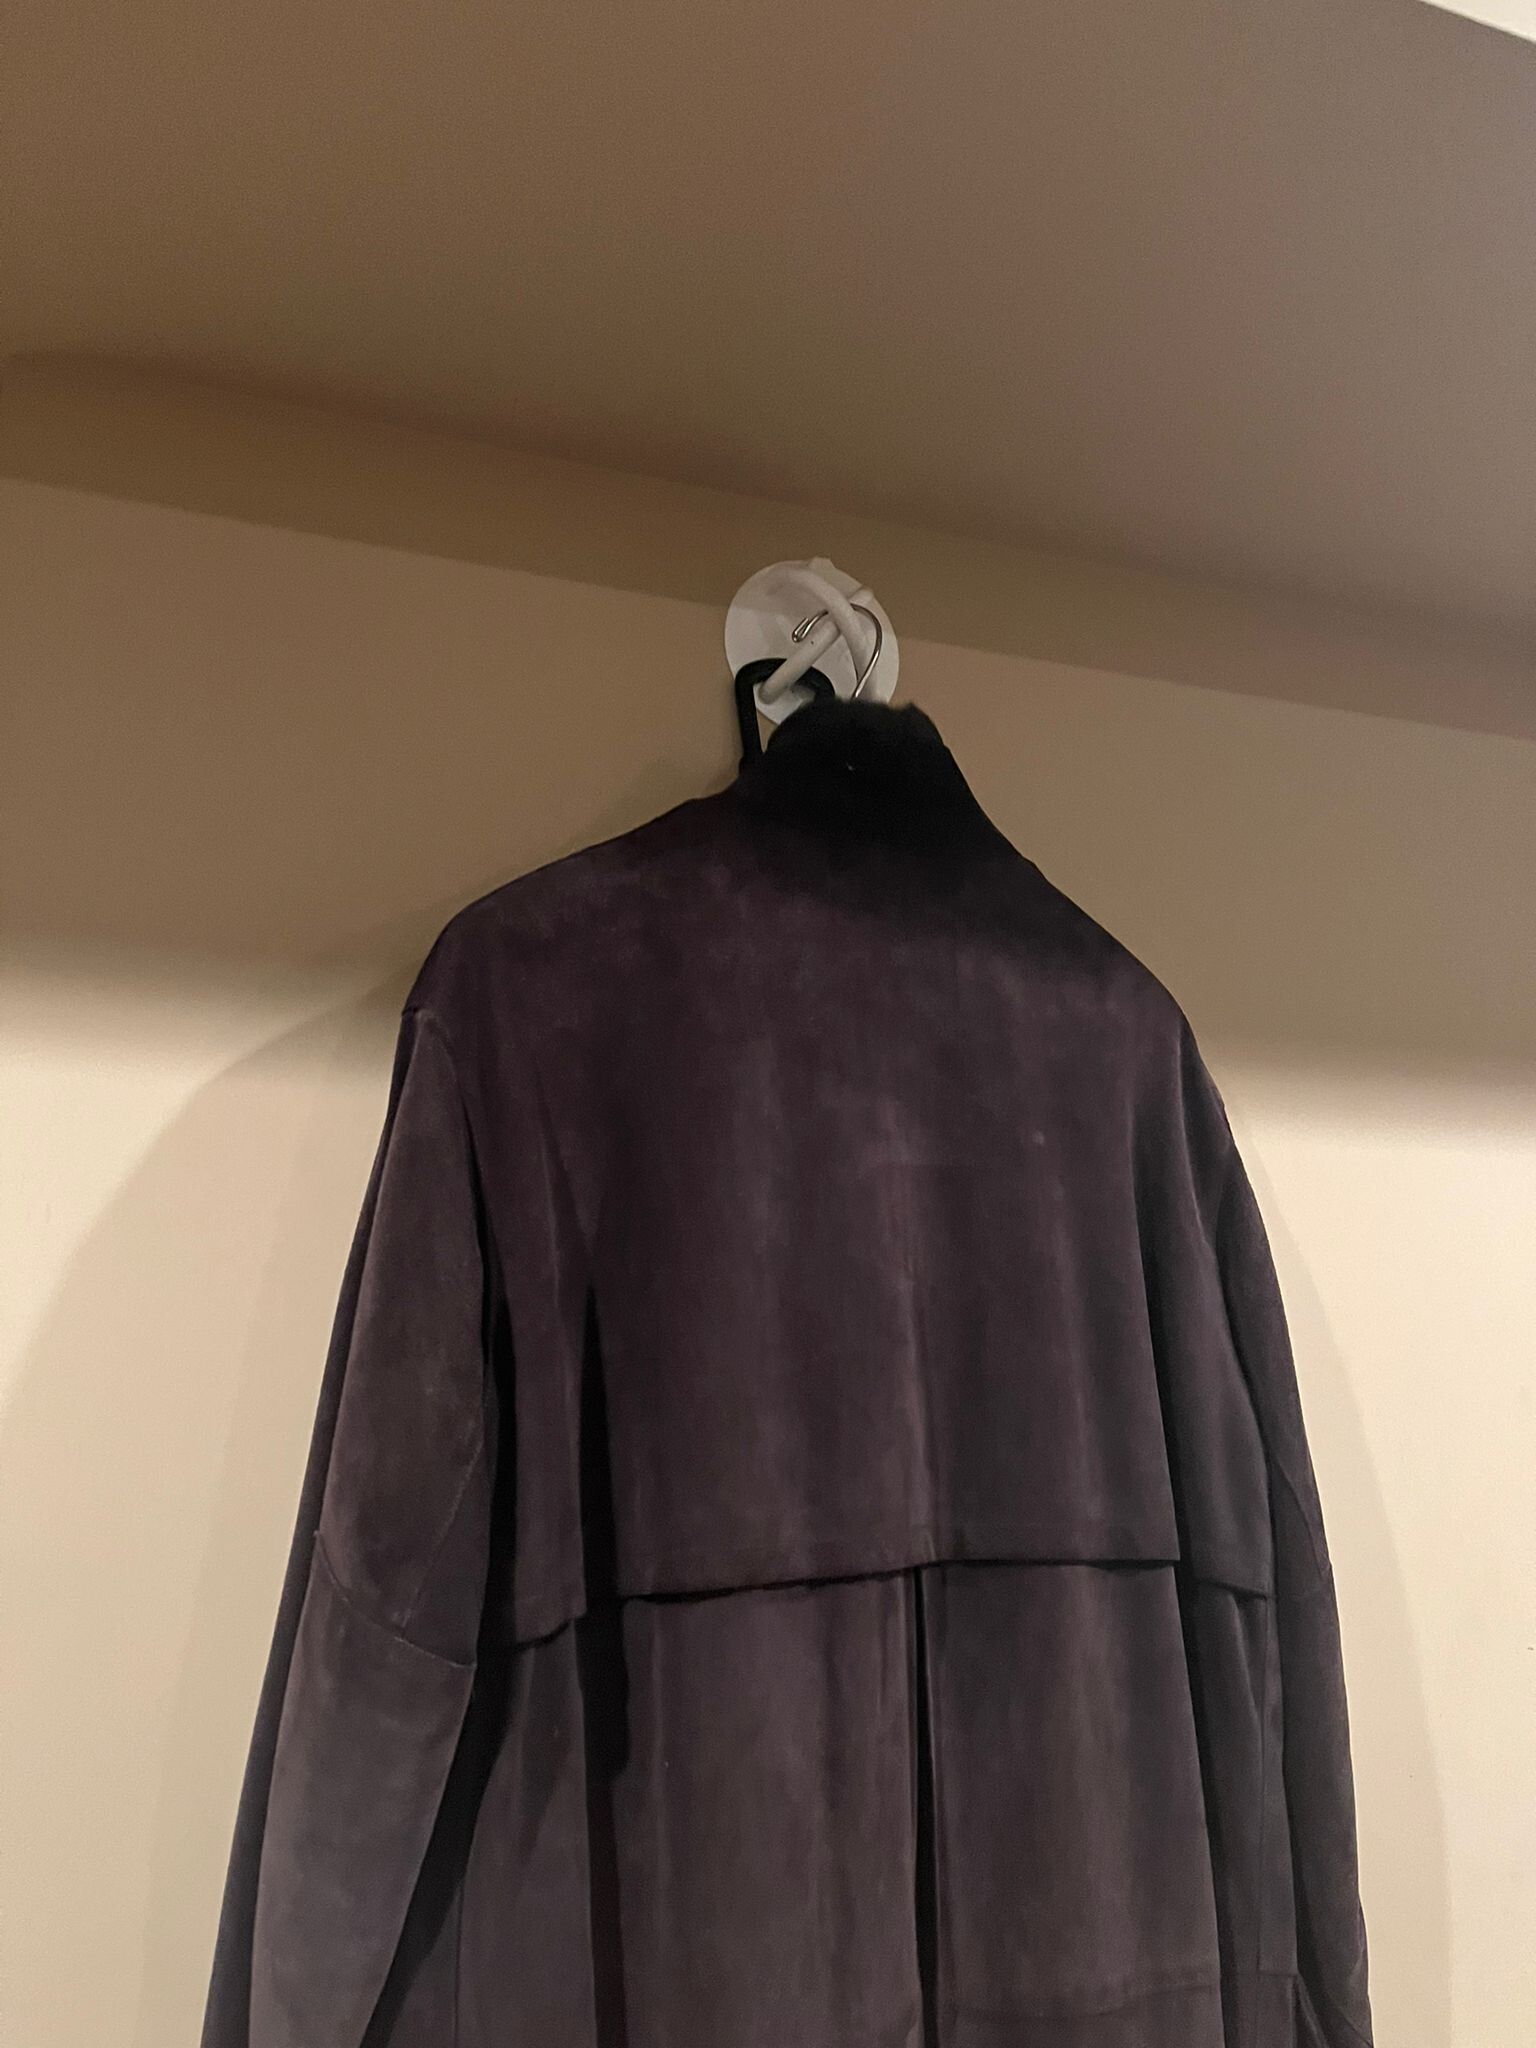 Gucci Long Coat in Dark Brown Size US M / EU 48-50 / 2 - 8 Thumbnail